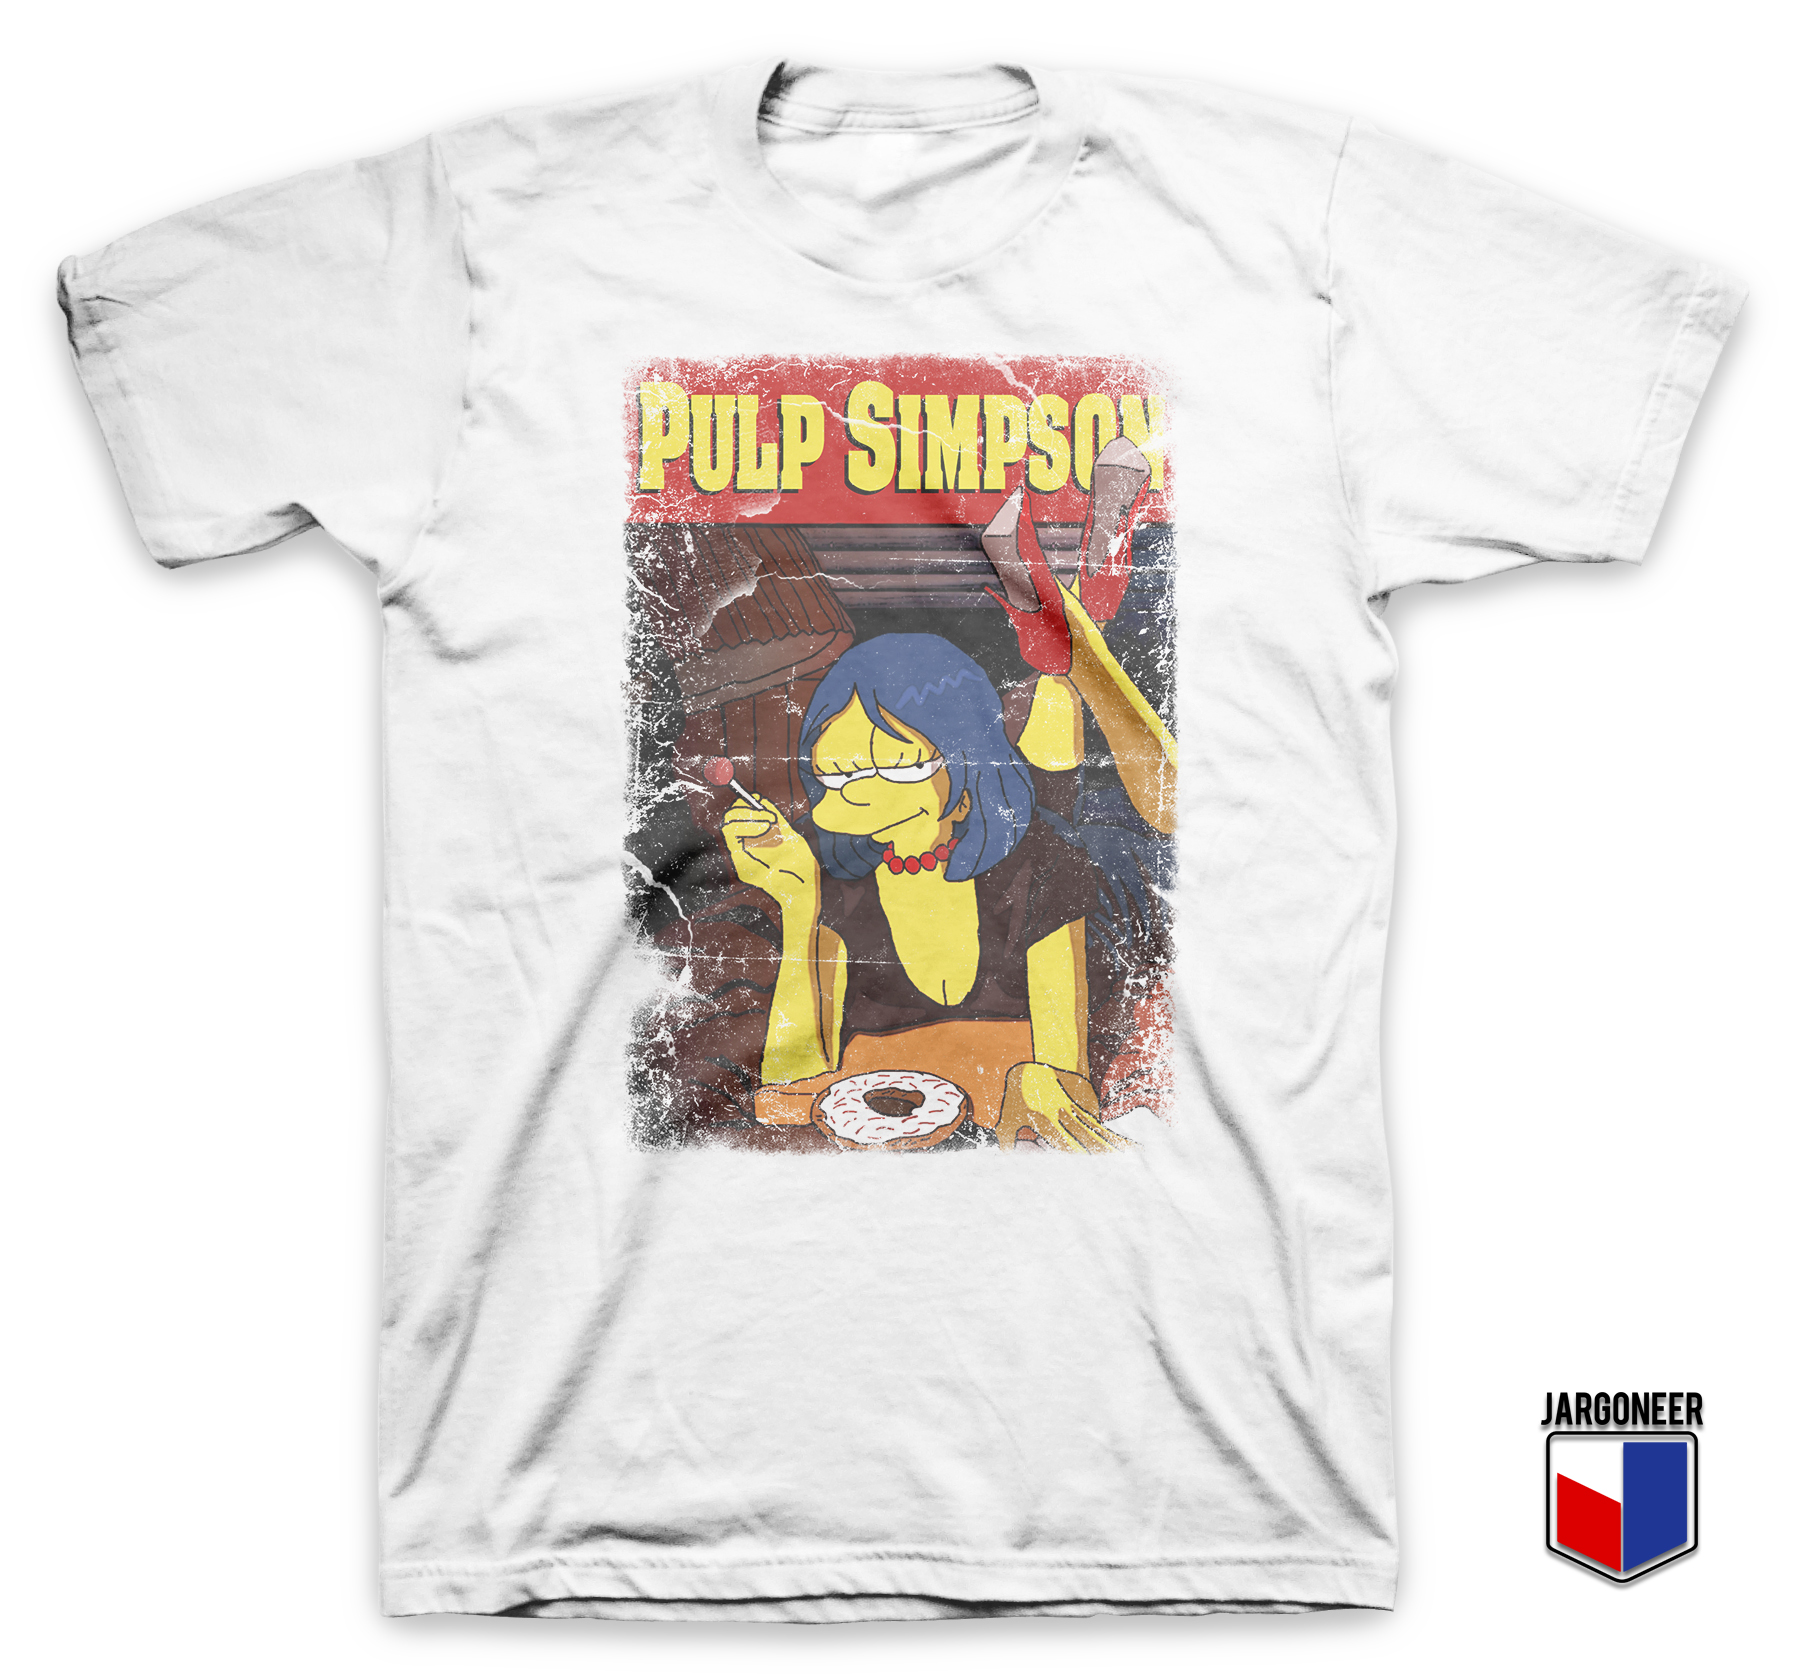 Pulp Simpson T-Shirt Cool Shirt Designs jargoneer.com.